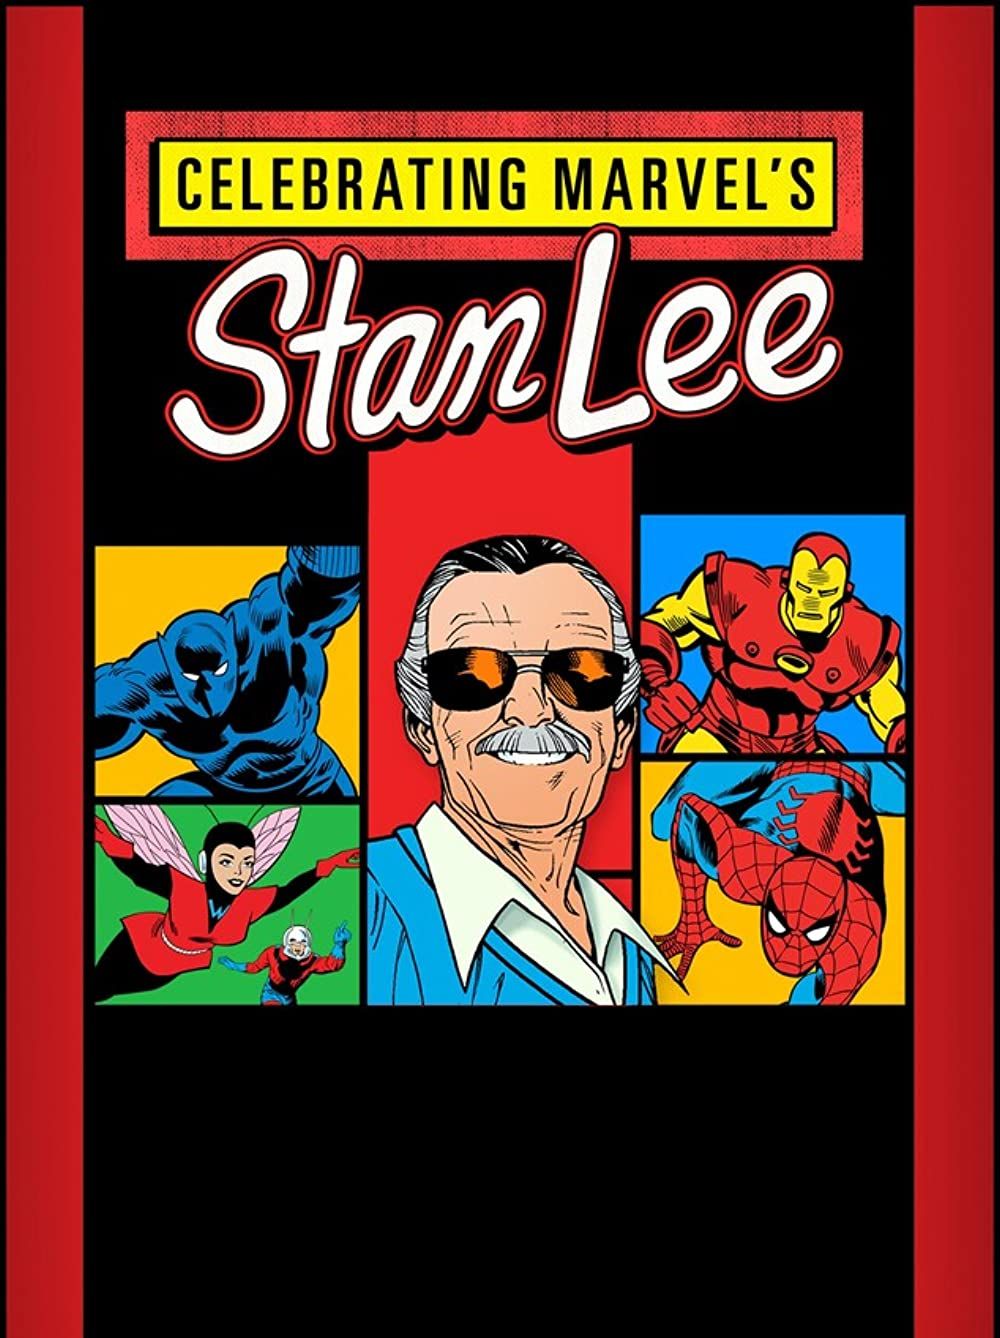 Marvel's Stan Lee Documentary (2019) MovieWeb